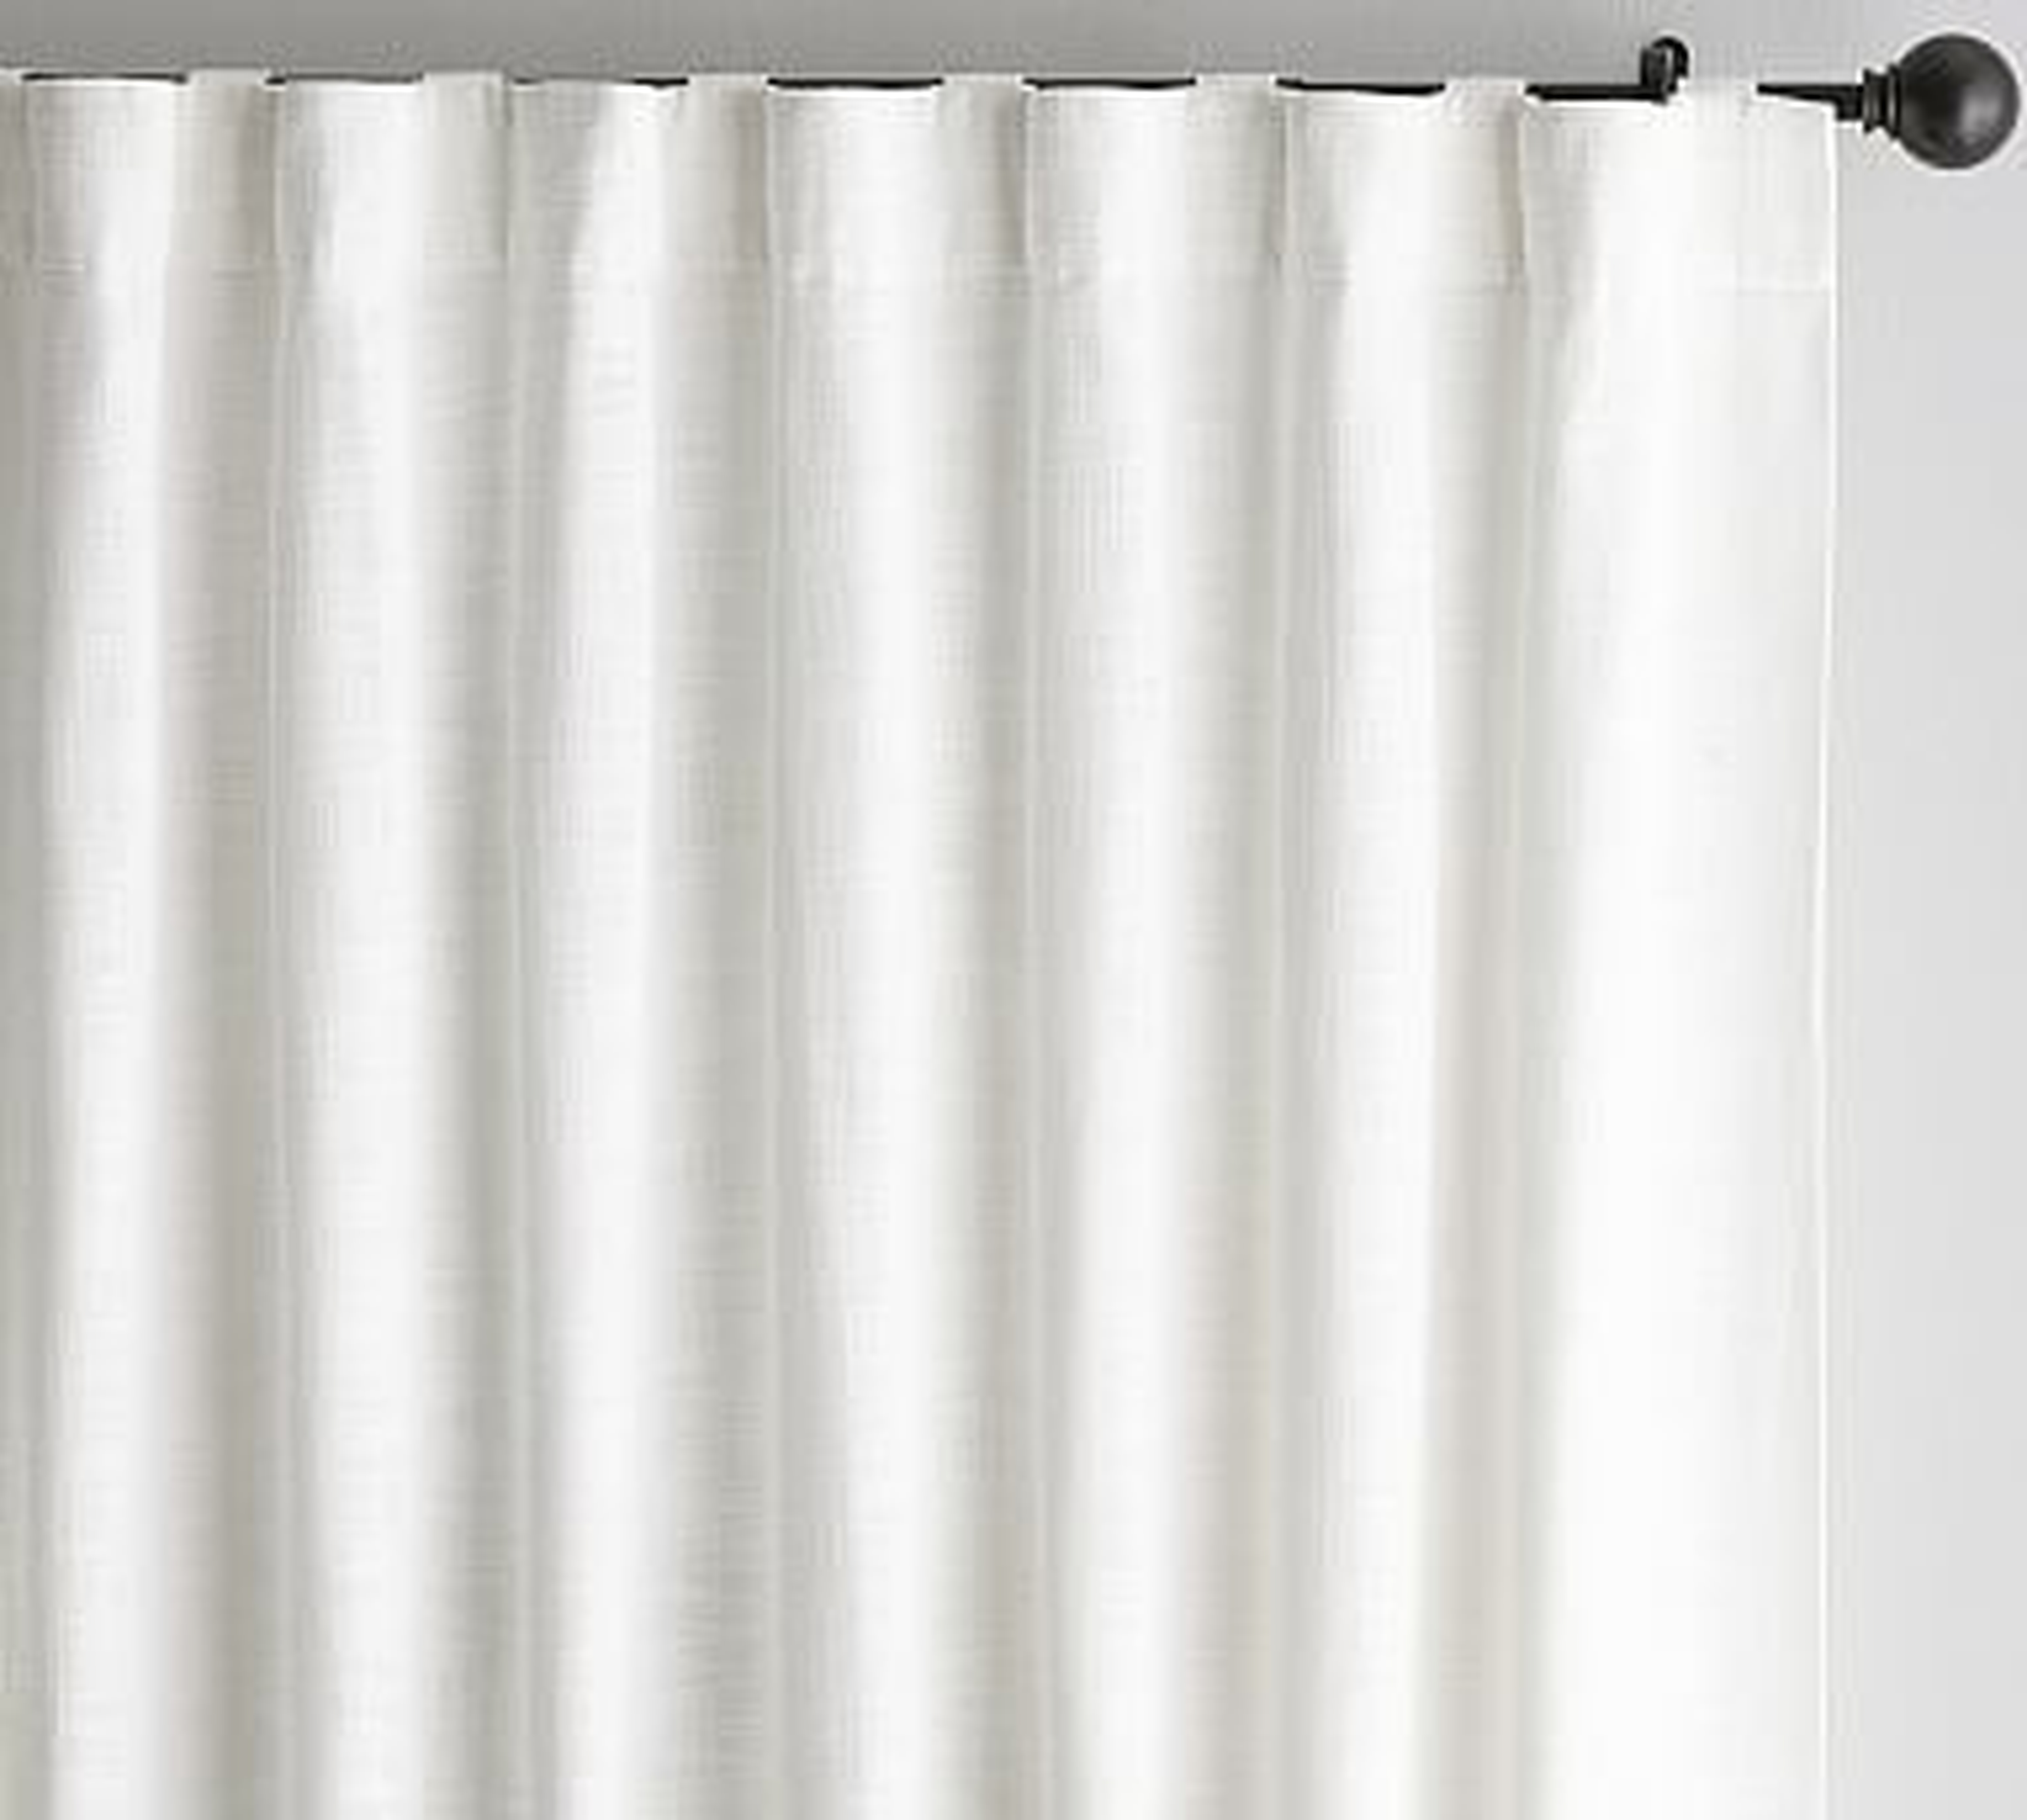 Seaton Textured Cotton Rod Pocket Curtain, 50 X 108", White. cotton lining - Pottery Barn